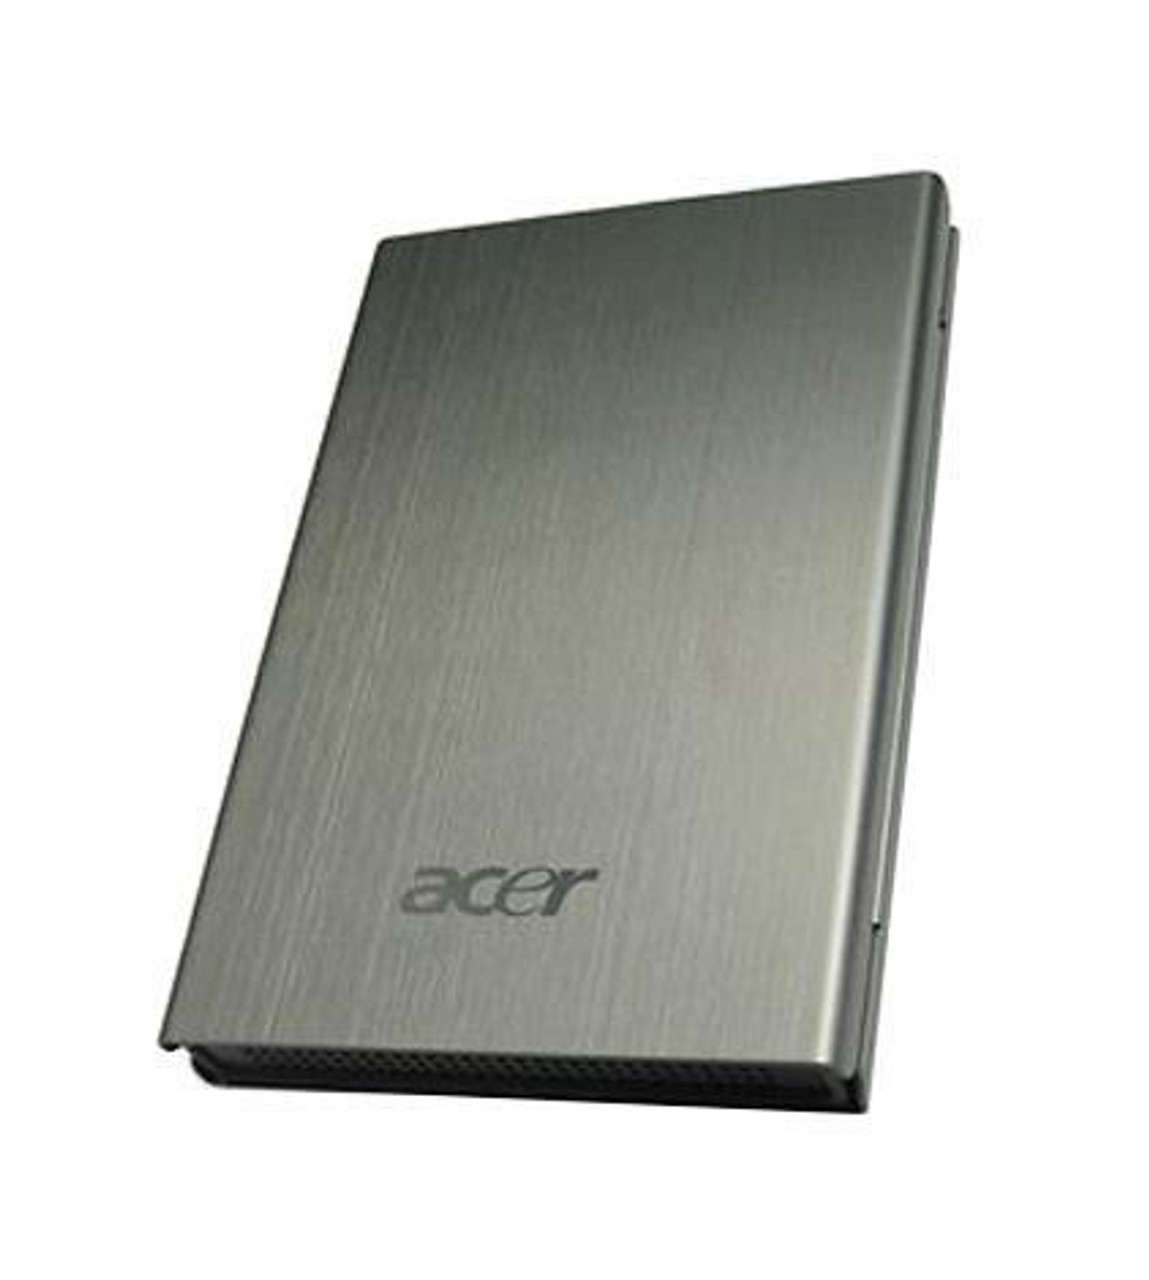 Acer 250 GB Hard Drive - External -  MFR P/N LC.HDD00.076